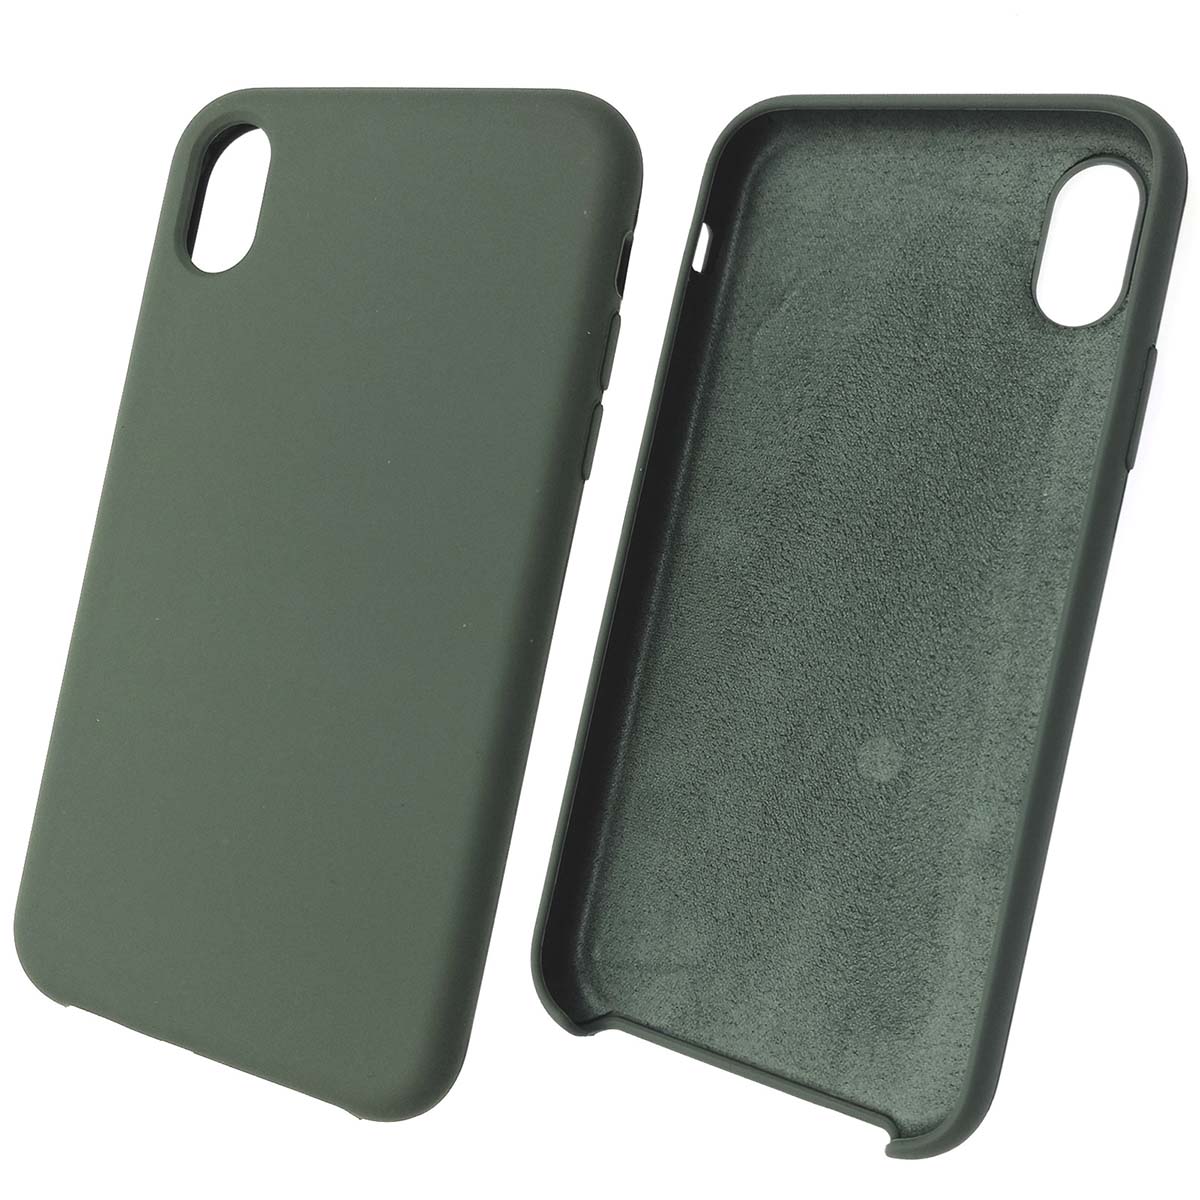 Чехол накладка Silicon Case для APPLE iPhone XR, силикон, бархат, цвет тихий зеленый.